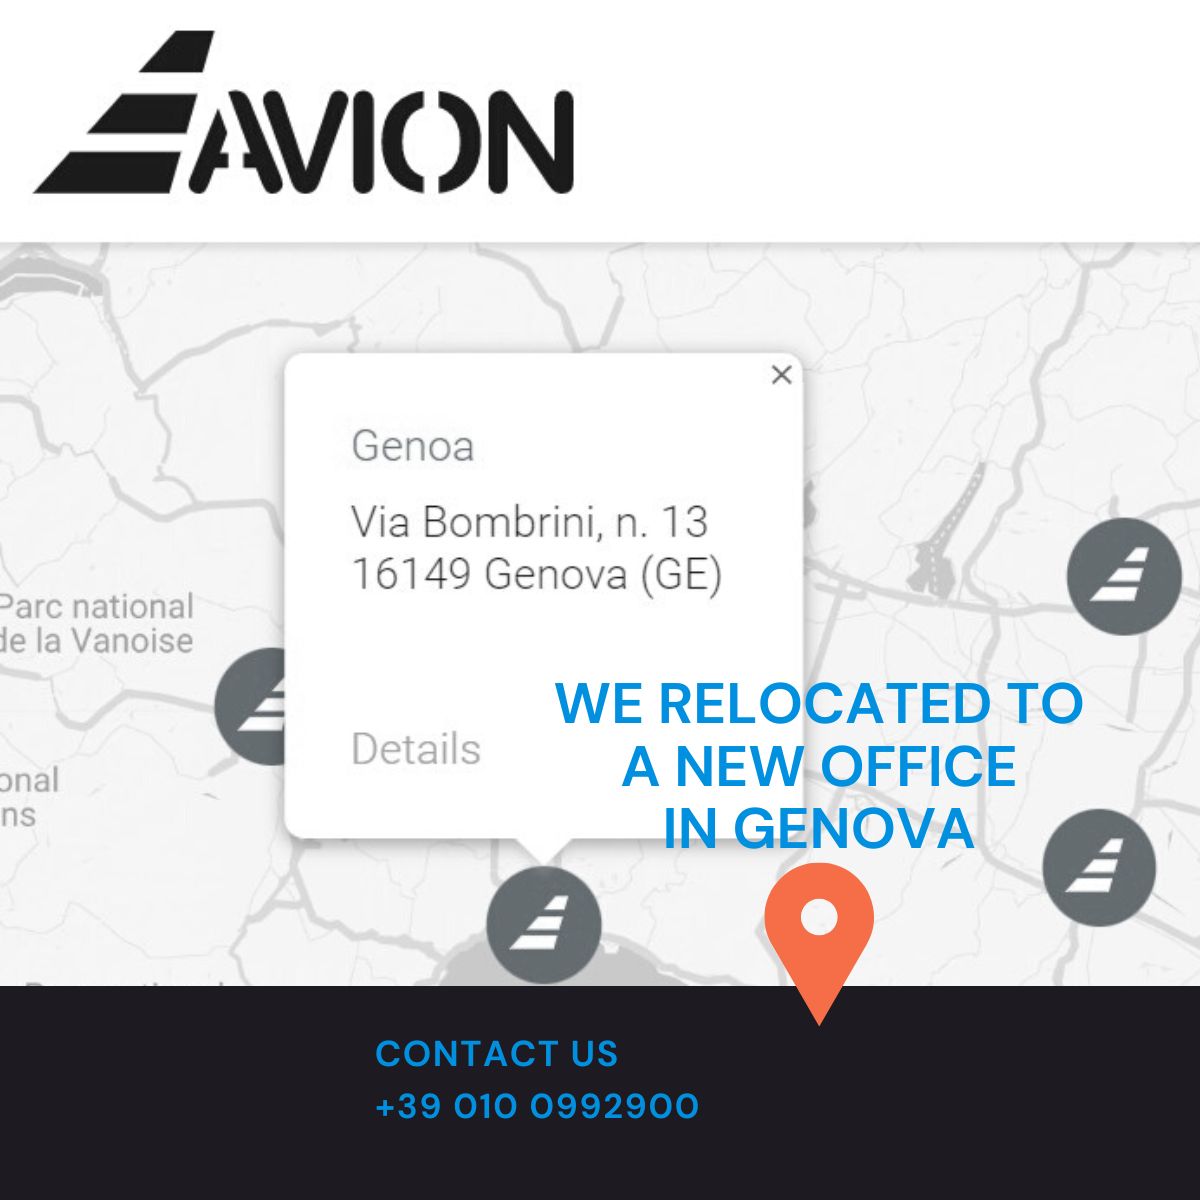 Avion Genoa office relocation